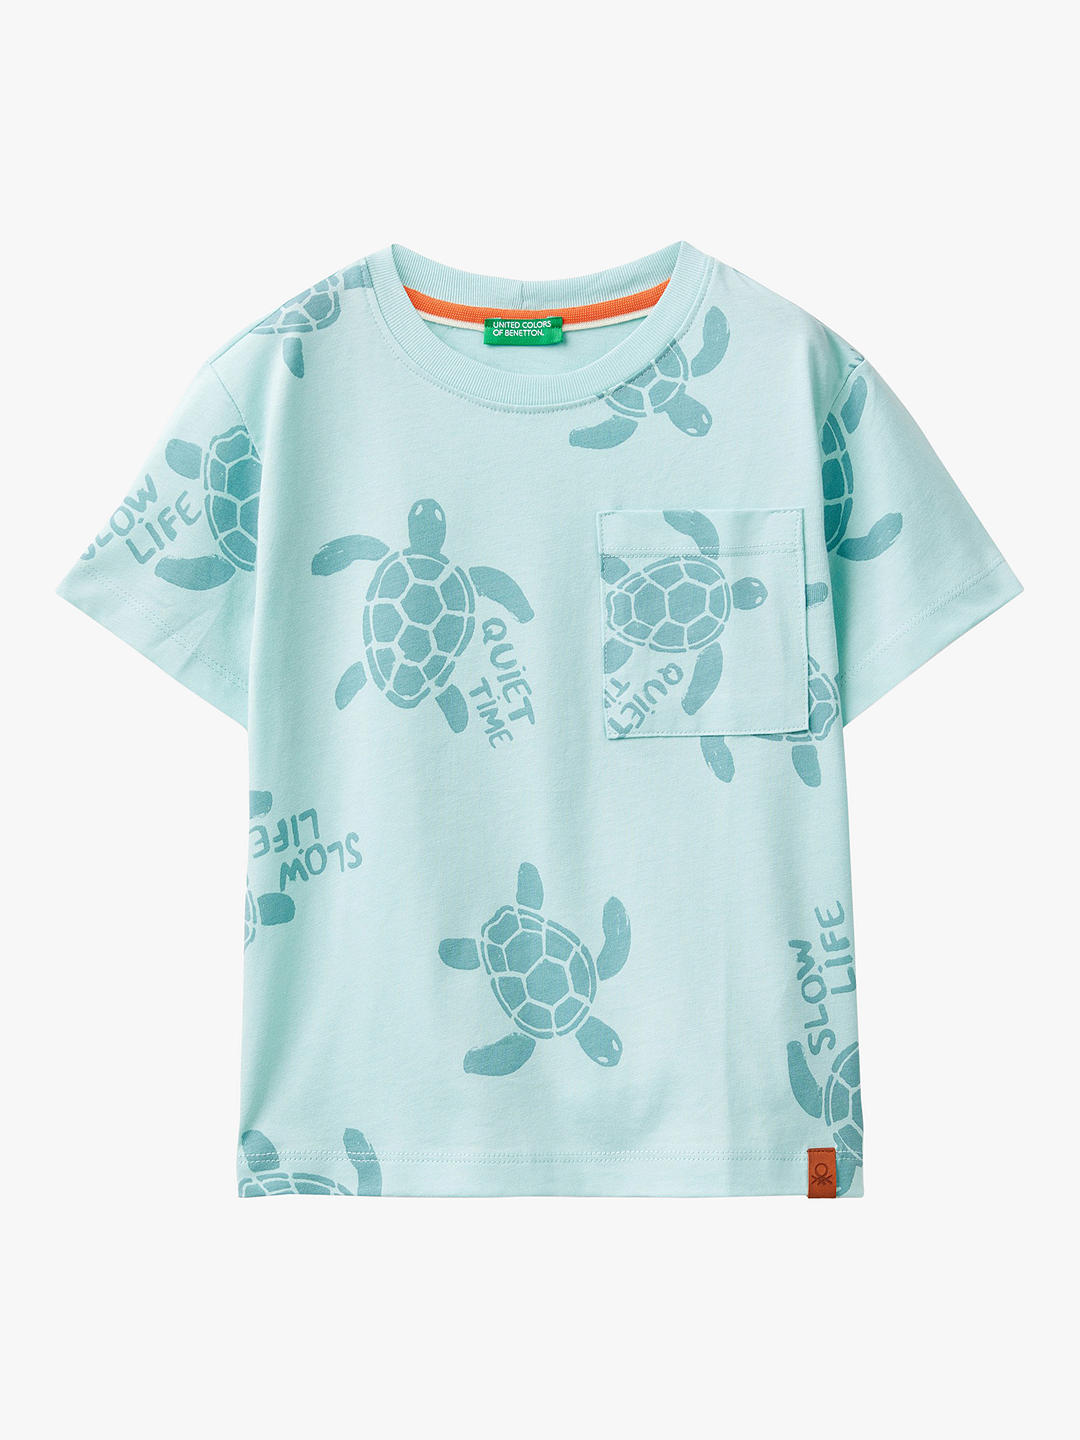 Benetton Kids' Turtle Print Pocket Detail T-Shirt, Light Blue Powder